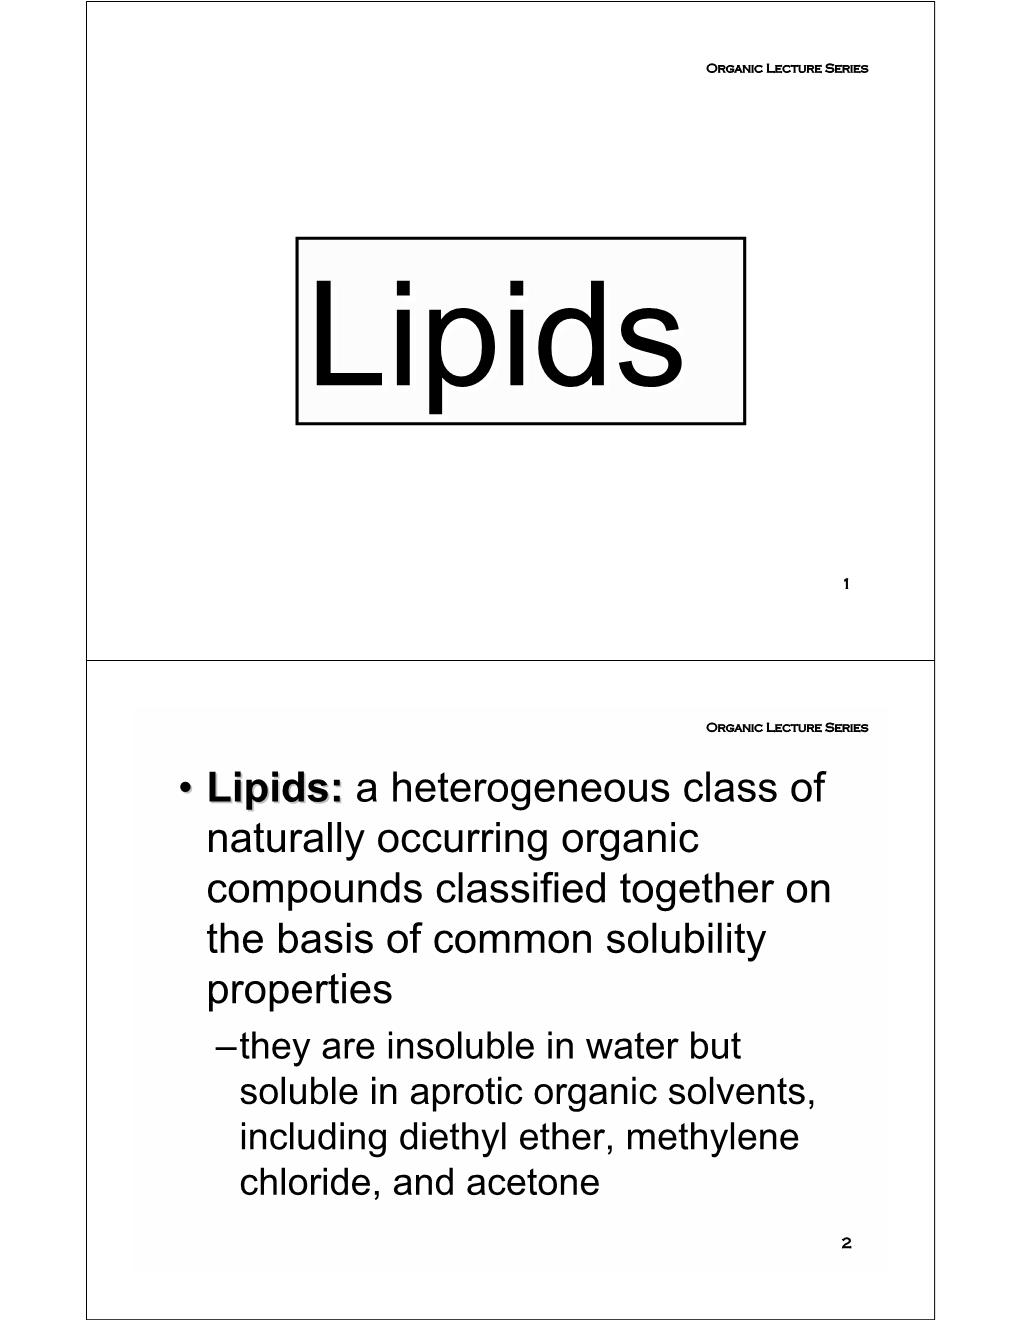 • Lipids: a Heterogeneous Class of Naturally Occurring Organic